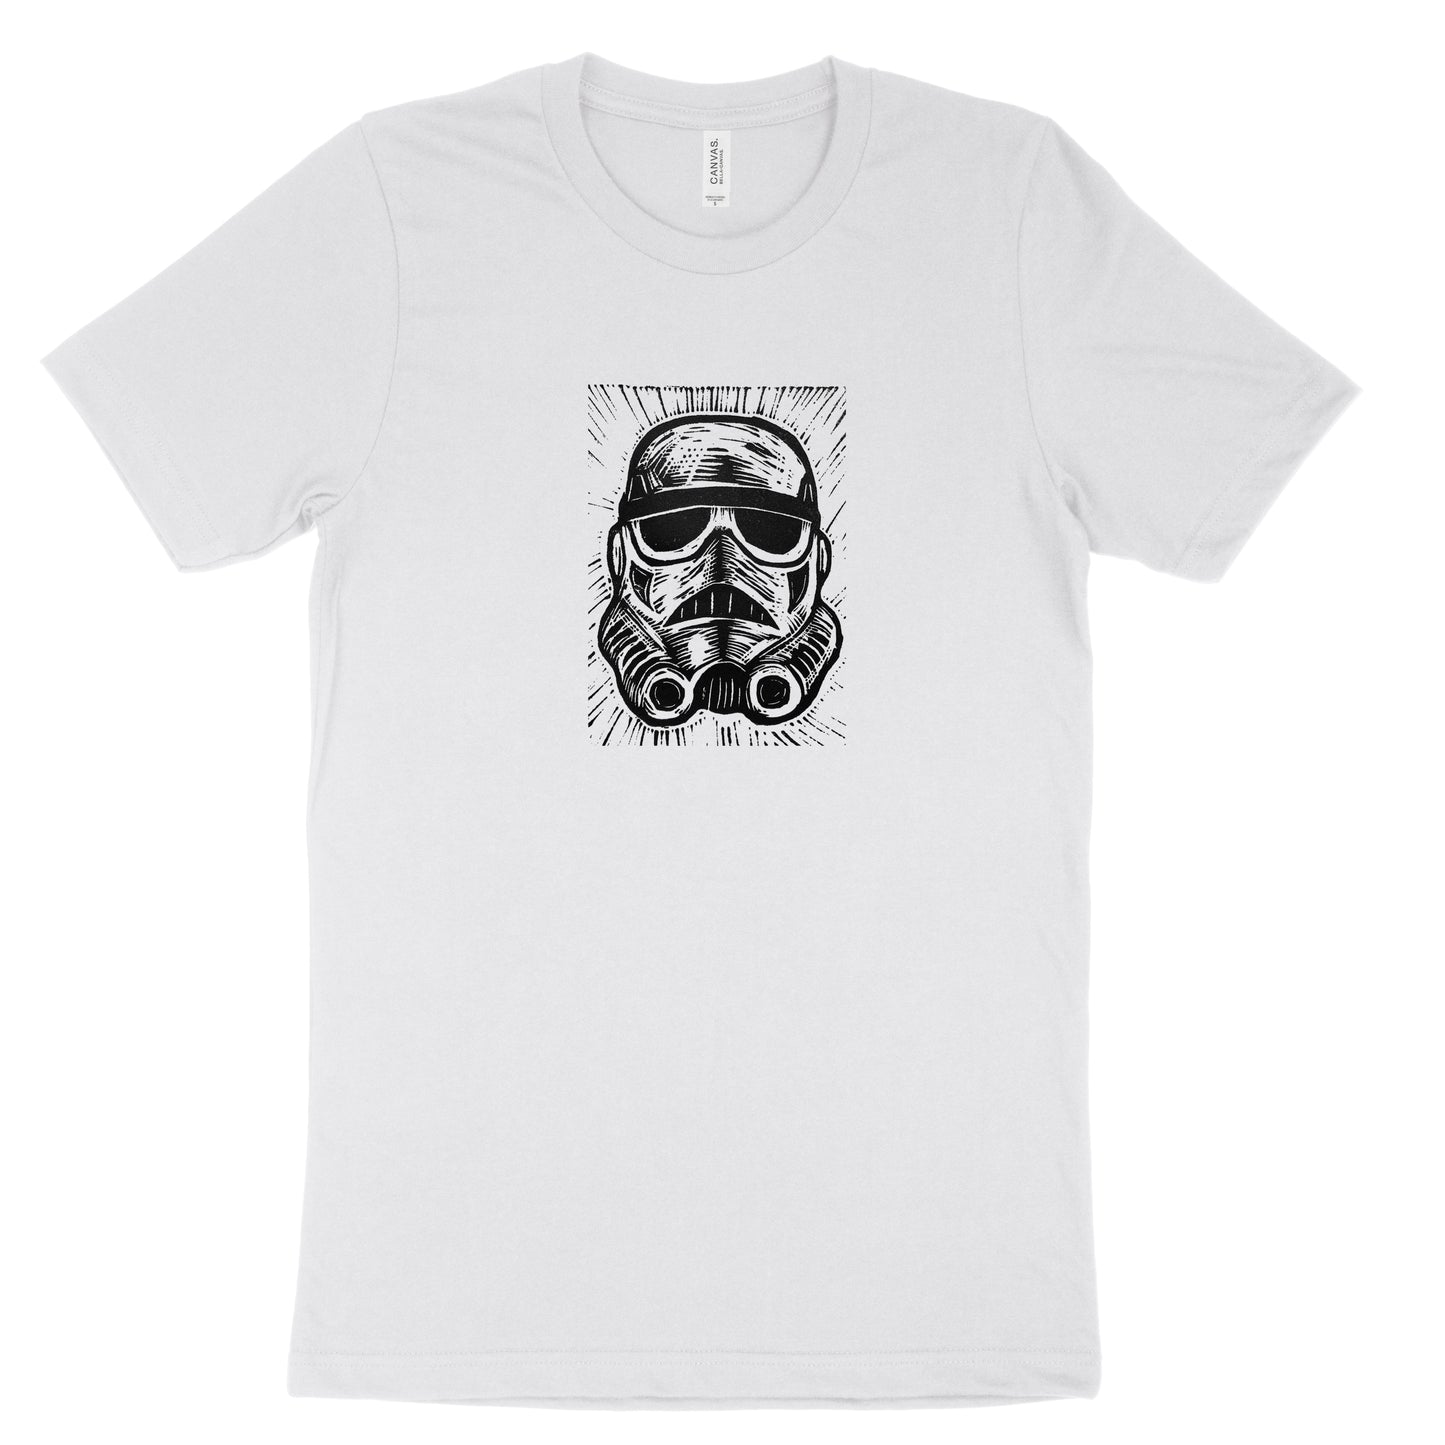 Stormtrooper Linocut Printed T-Shirt